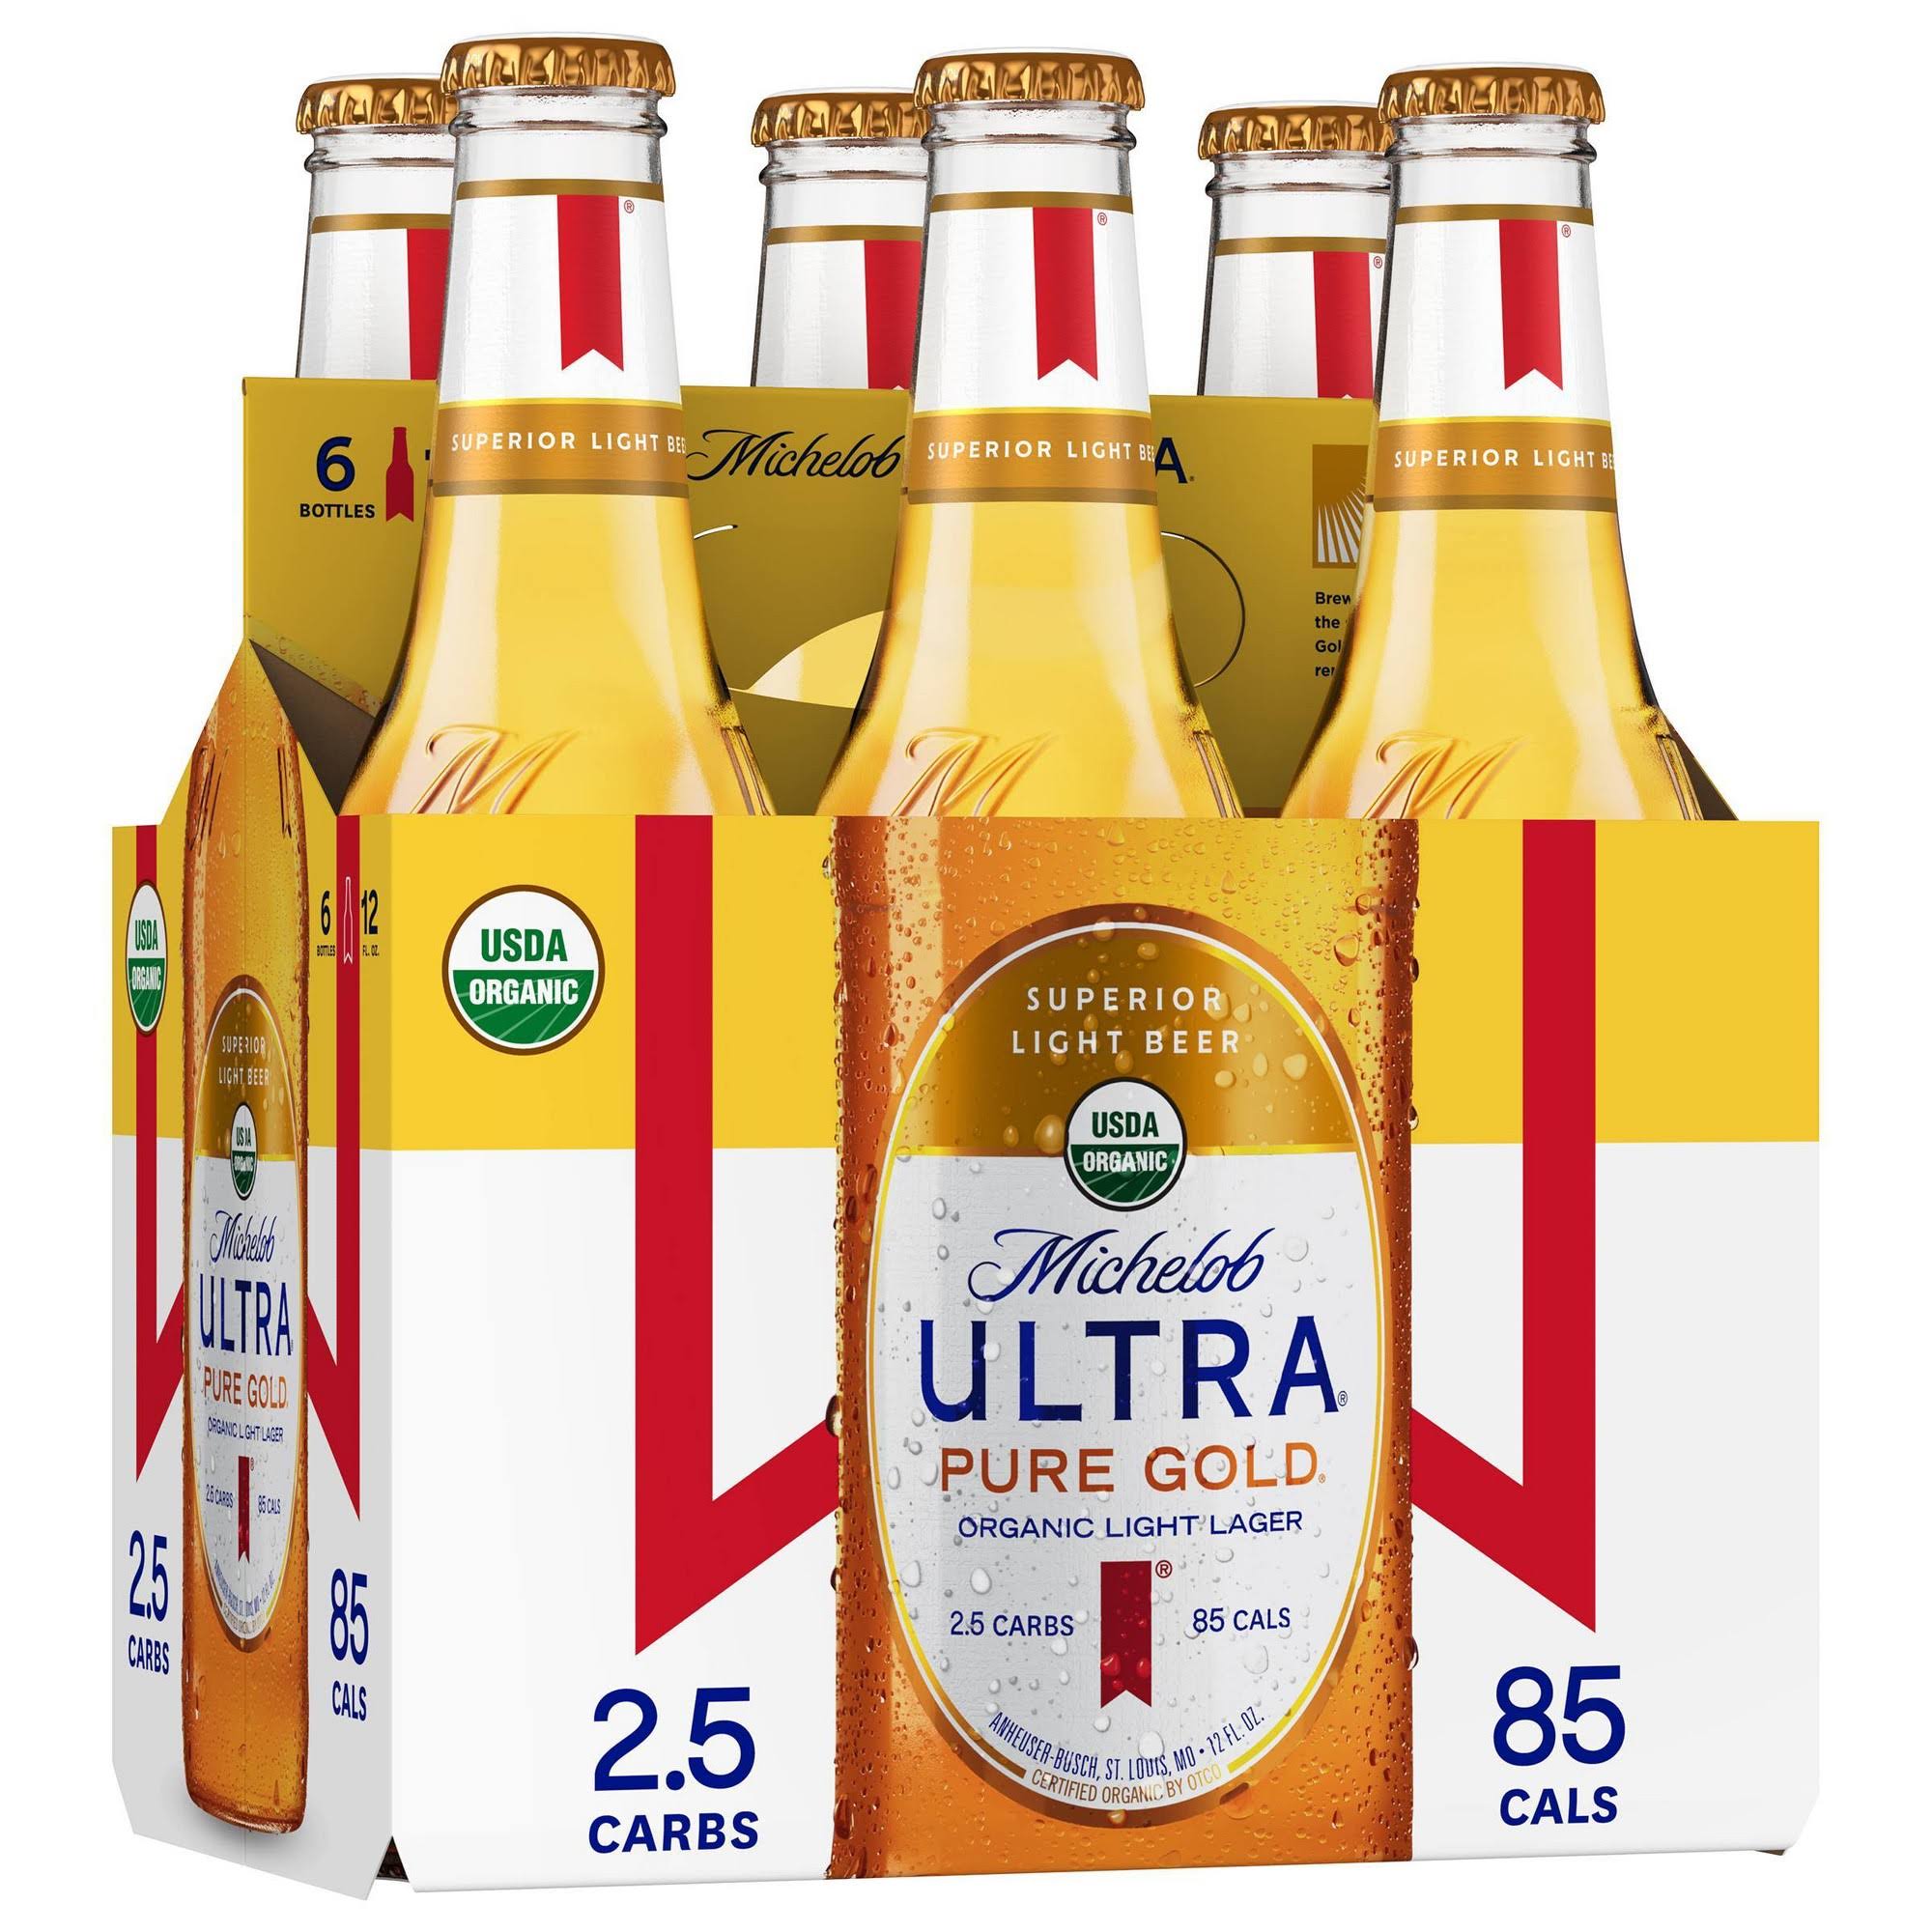 Michelob Ultra Pure Gold Beer, Organic, Light Lager - 6 pack, 12 fl oz bottles